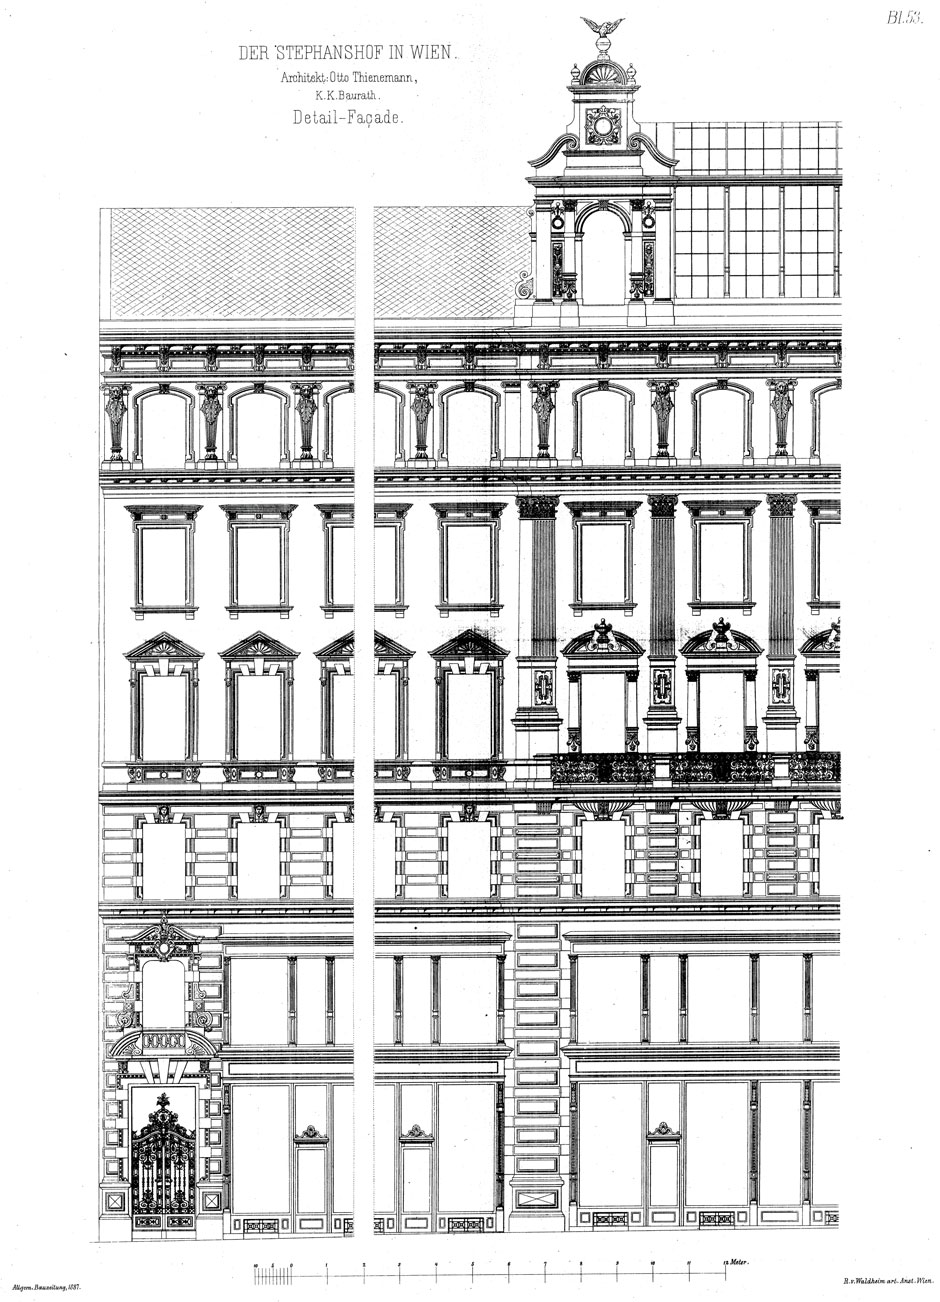 Archivbild: Stephanhof, Fassadendetail